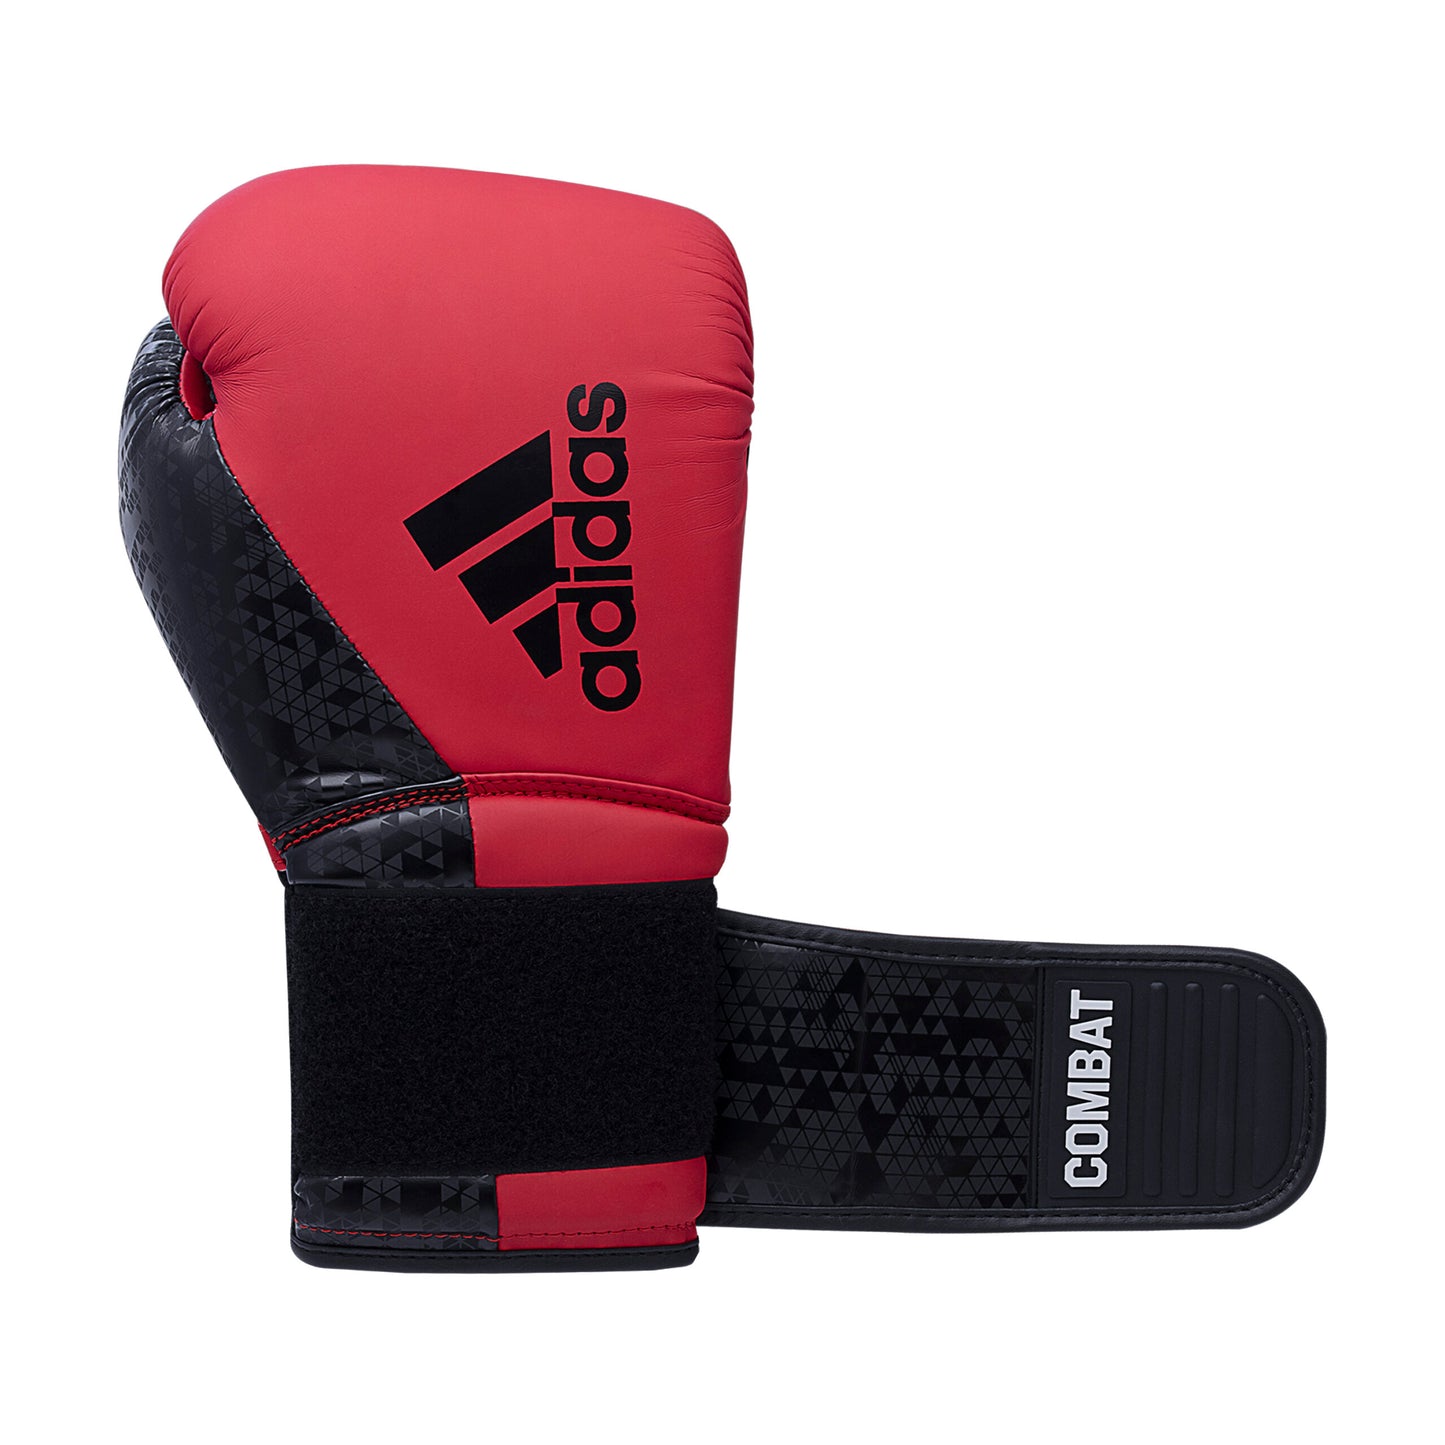 Adic50tg Combat 50 Training Boxing Gloves Vivid Red Black 05